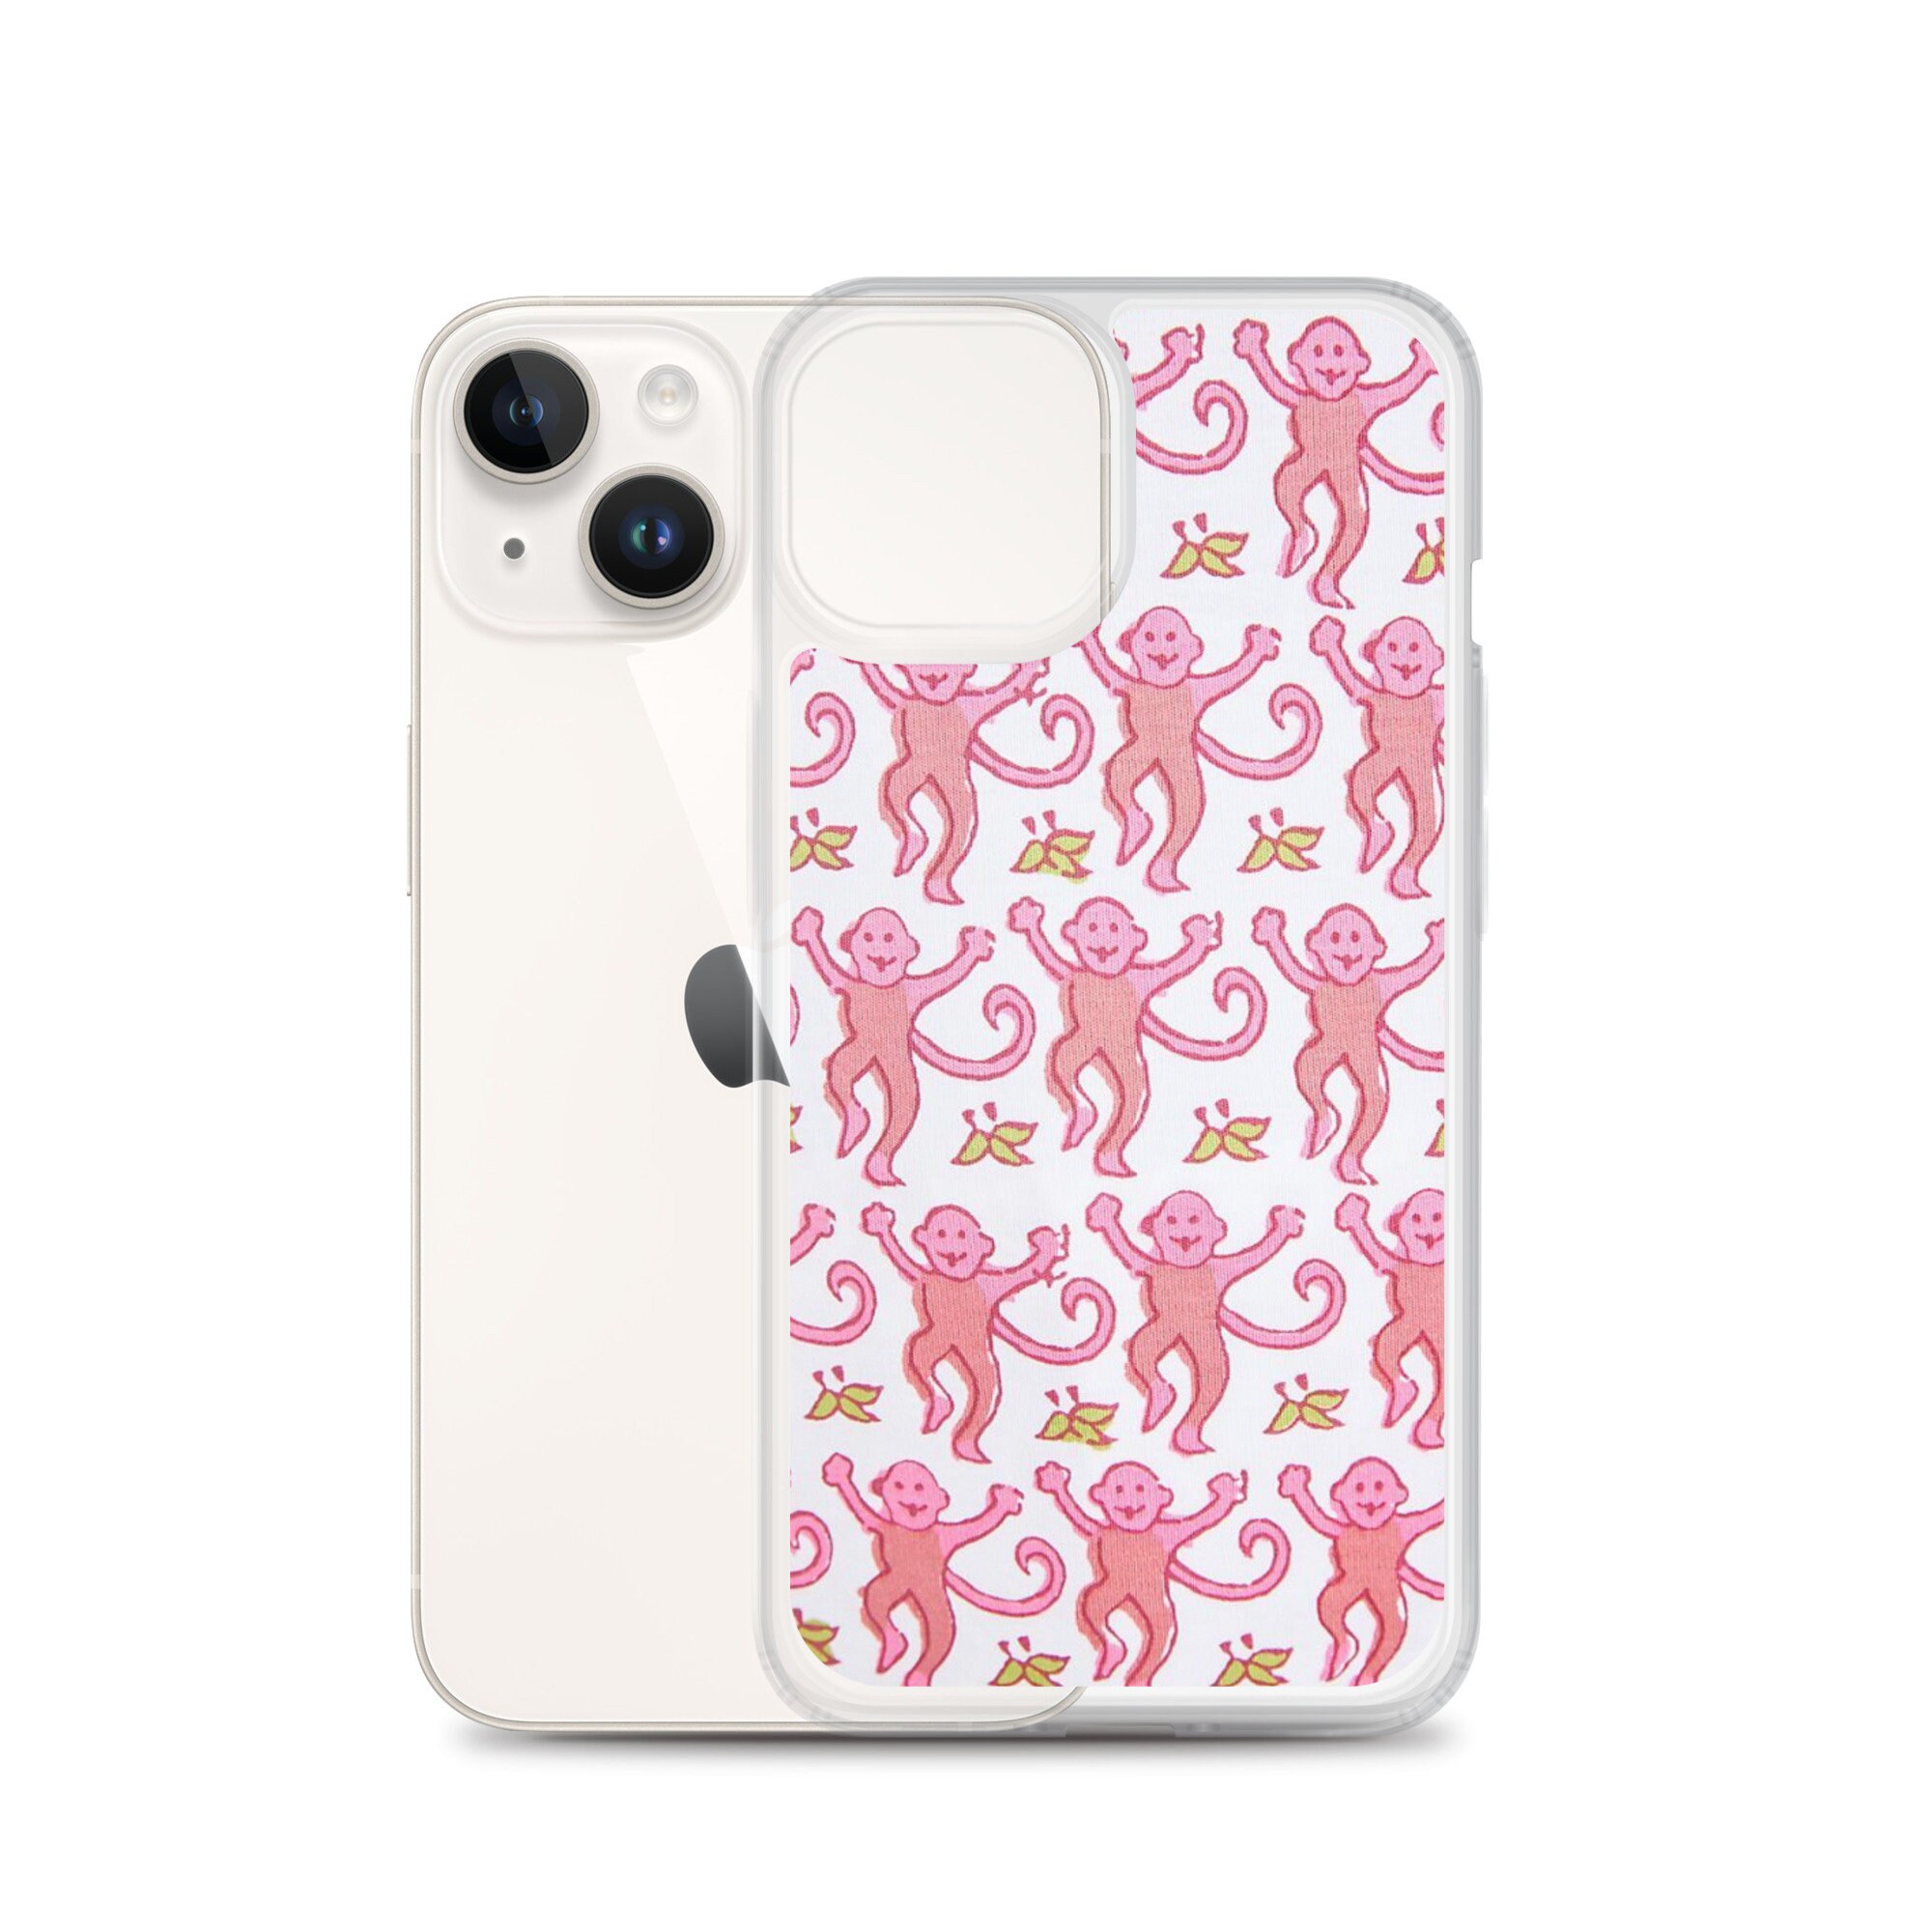 iPhone SX Max Phone Case Roller rabbit design with - Depop